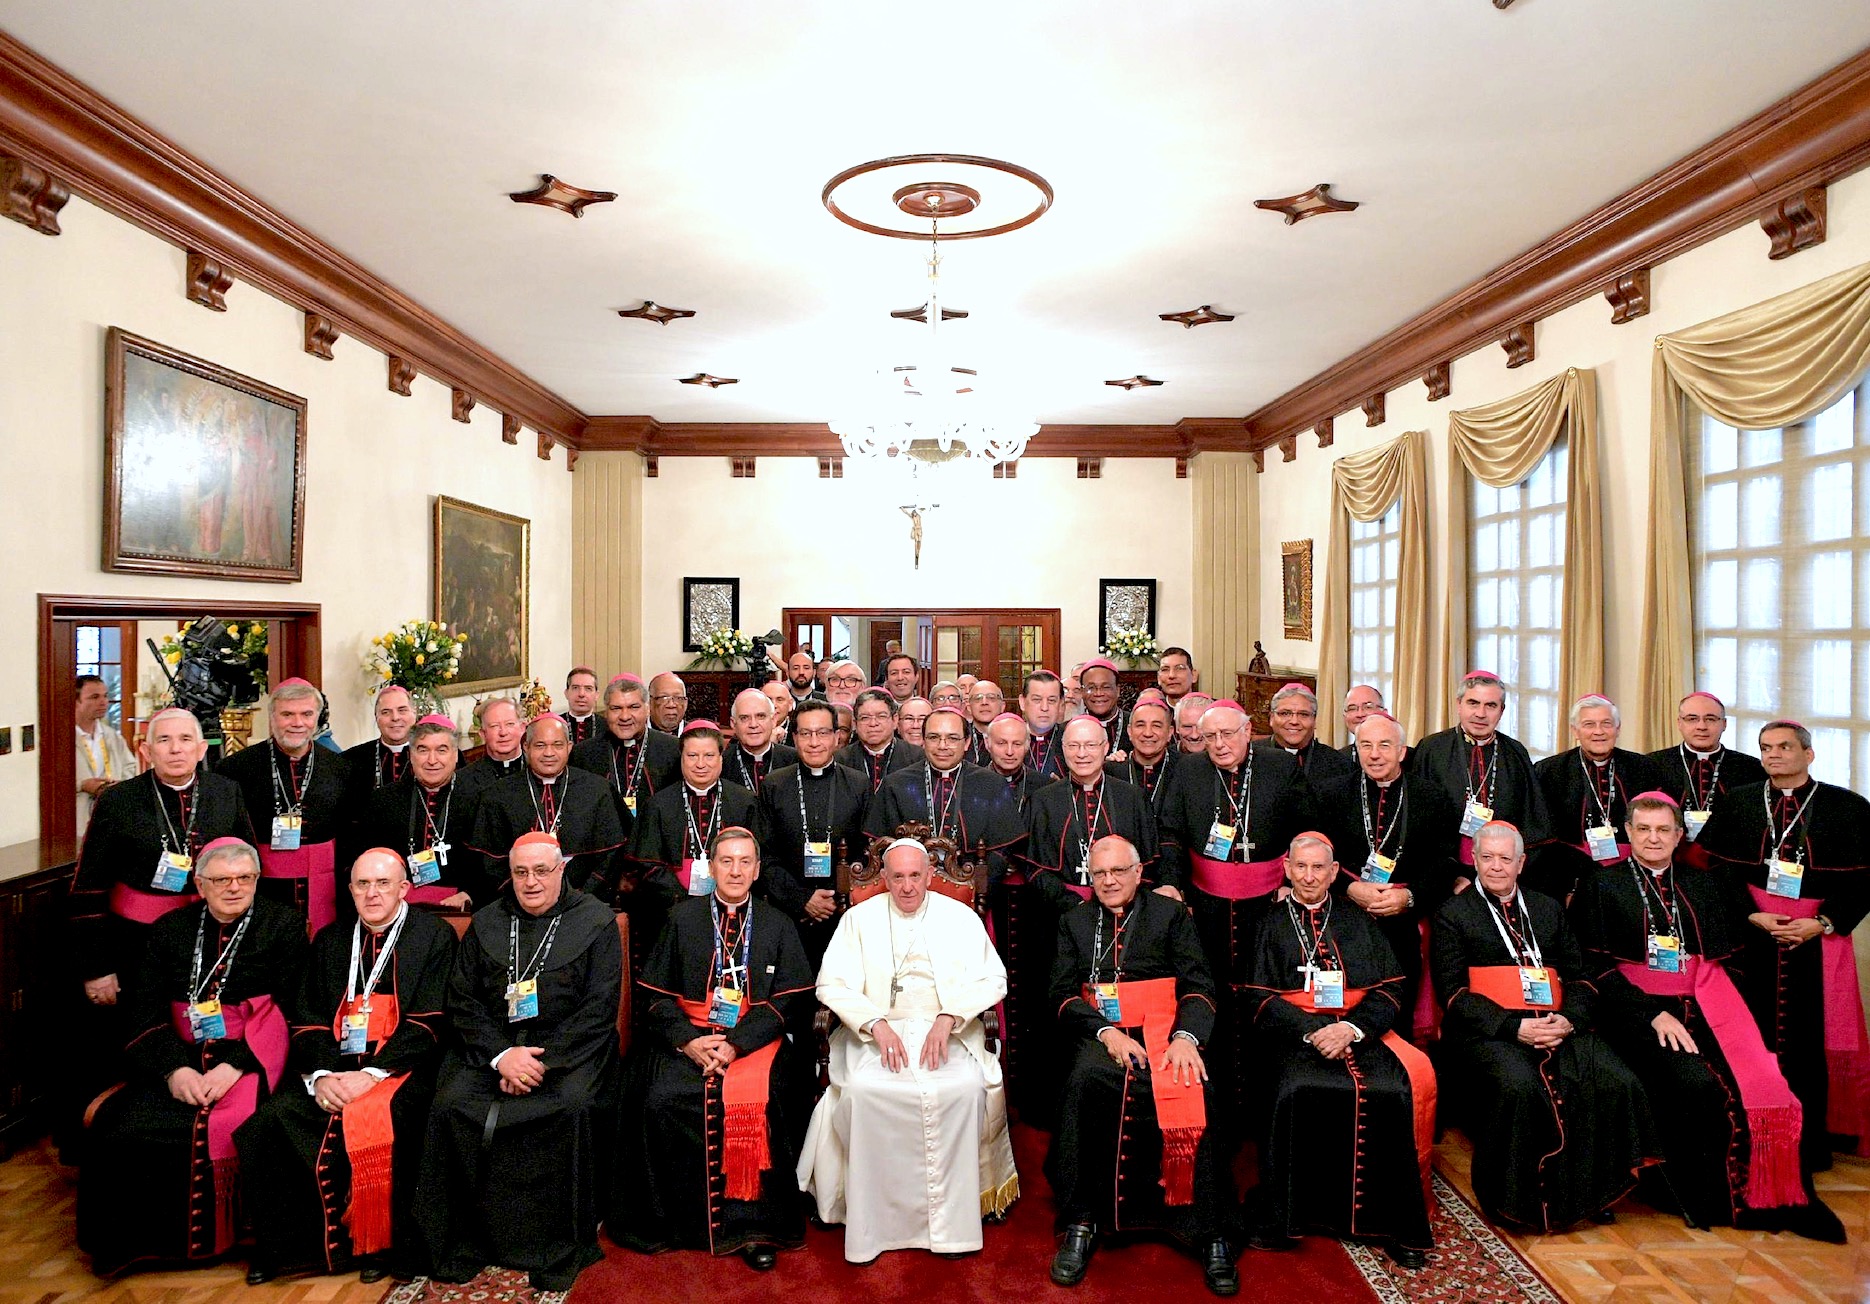 CELAM Obispos LatinoamericanosCELAM Obispos Latinoamericanos